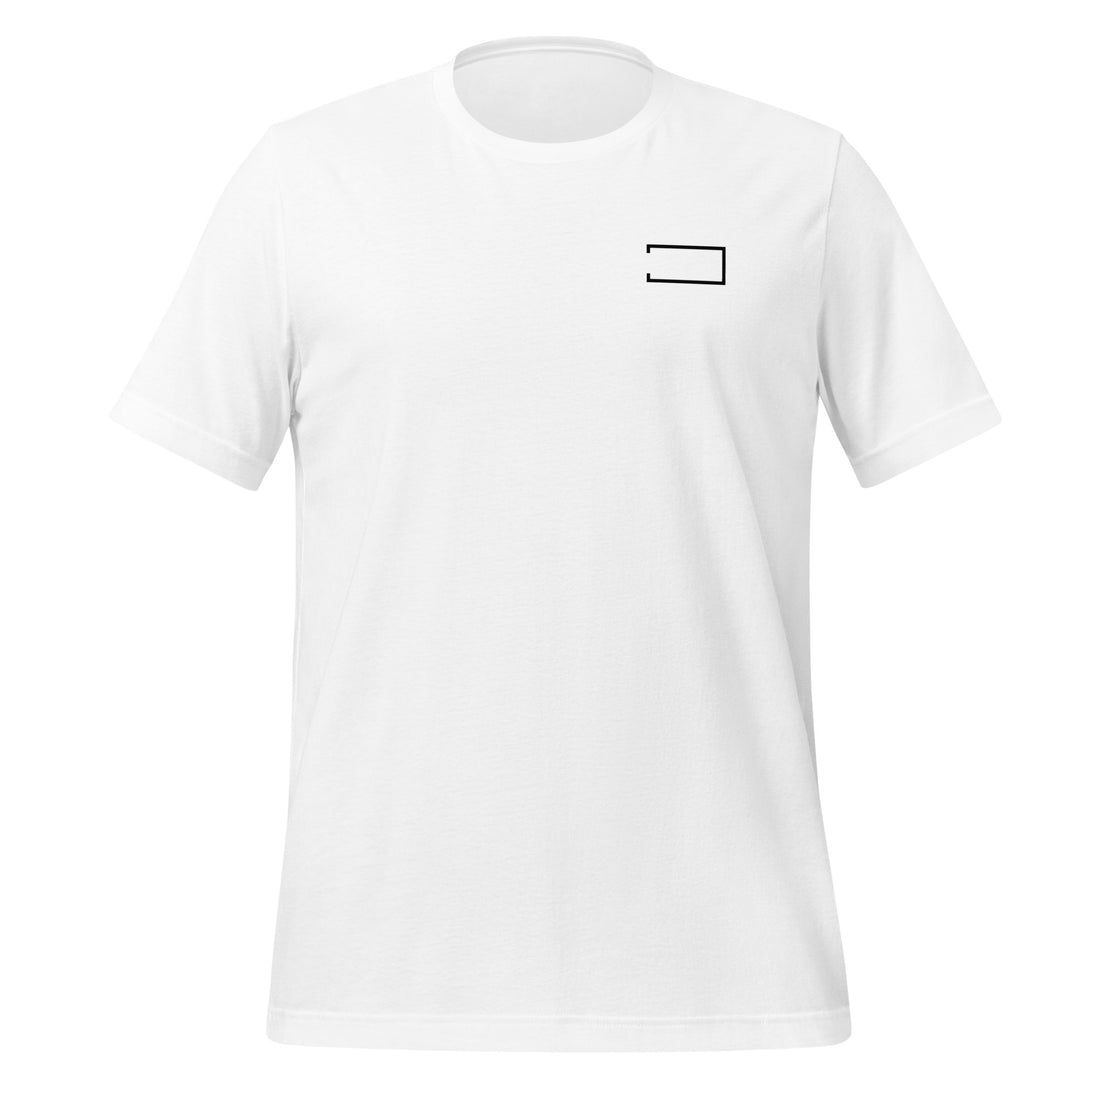 SUCCESS - WHATEVER IT TAKES / Unisex t-shirt